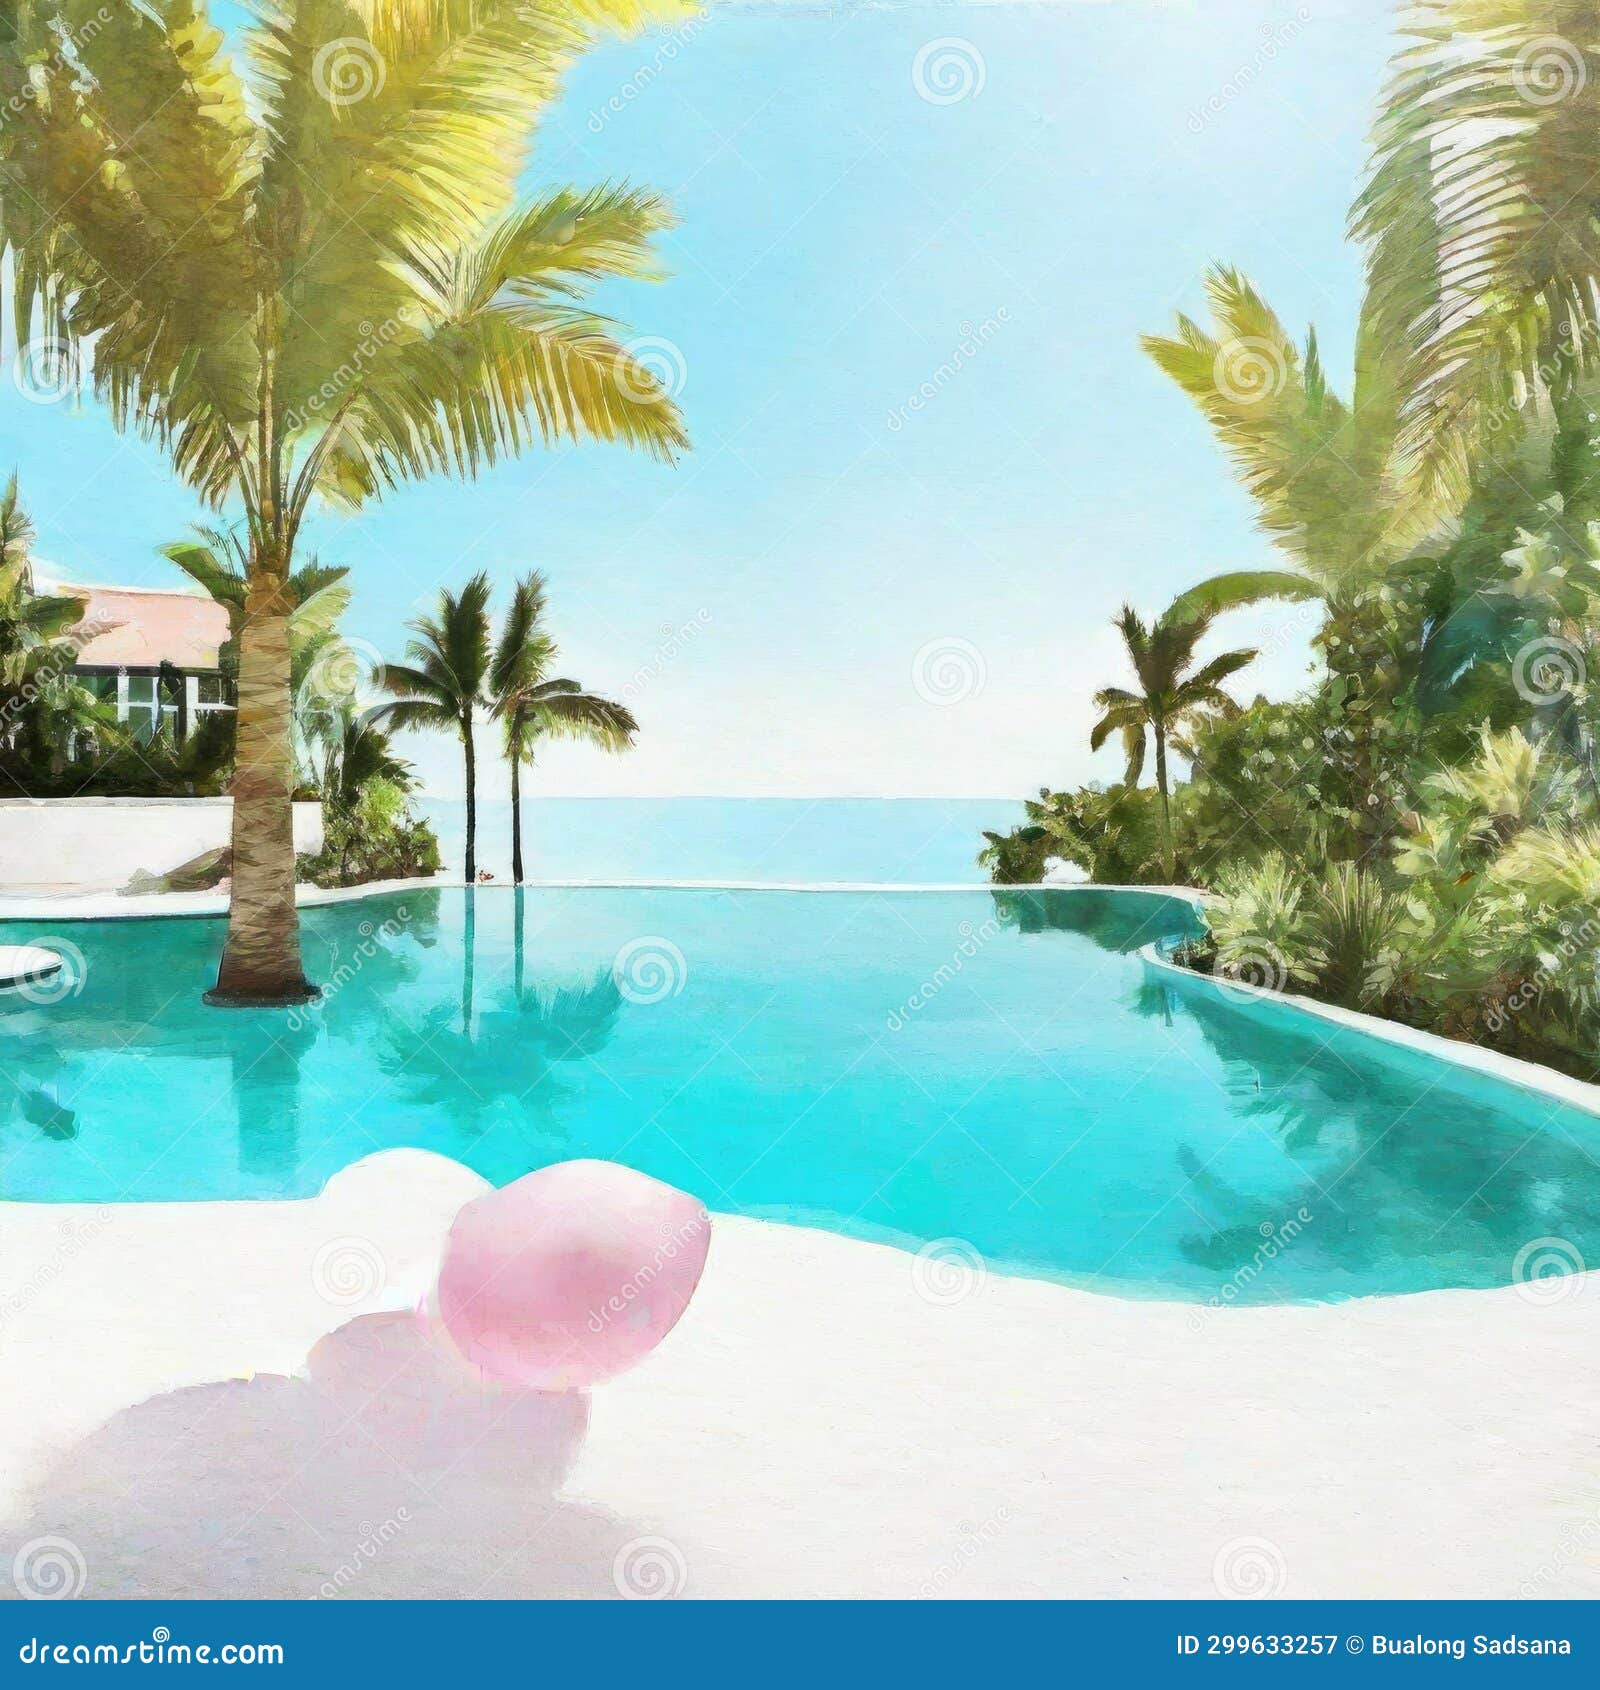 watercolor of product display piscina de lujo background piscina agua turquesa y palmeras ia generativa